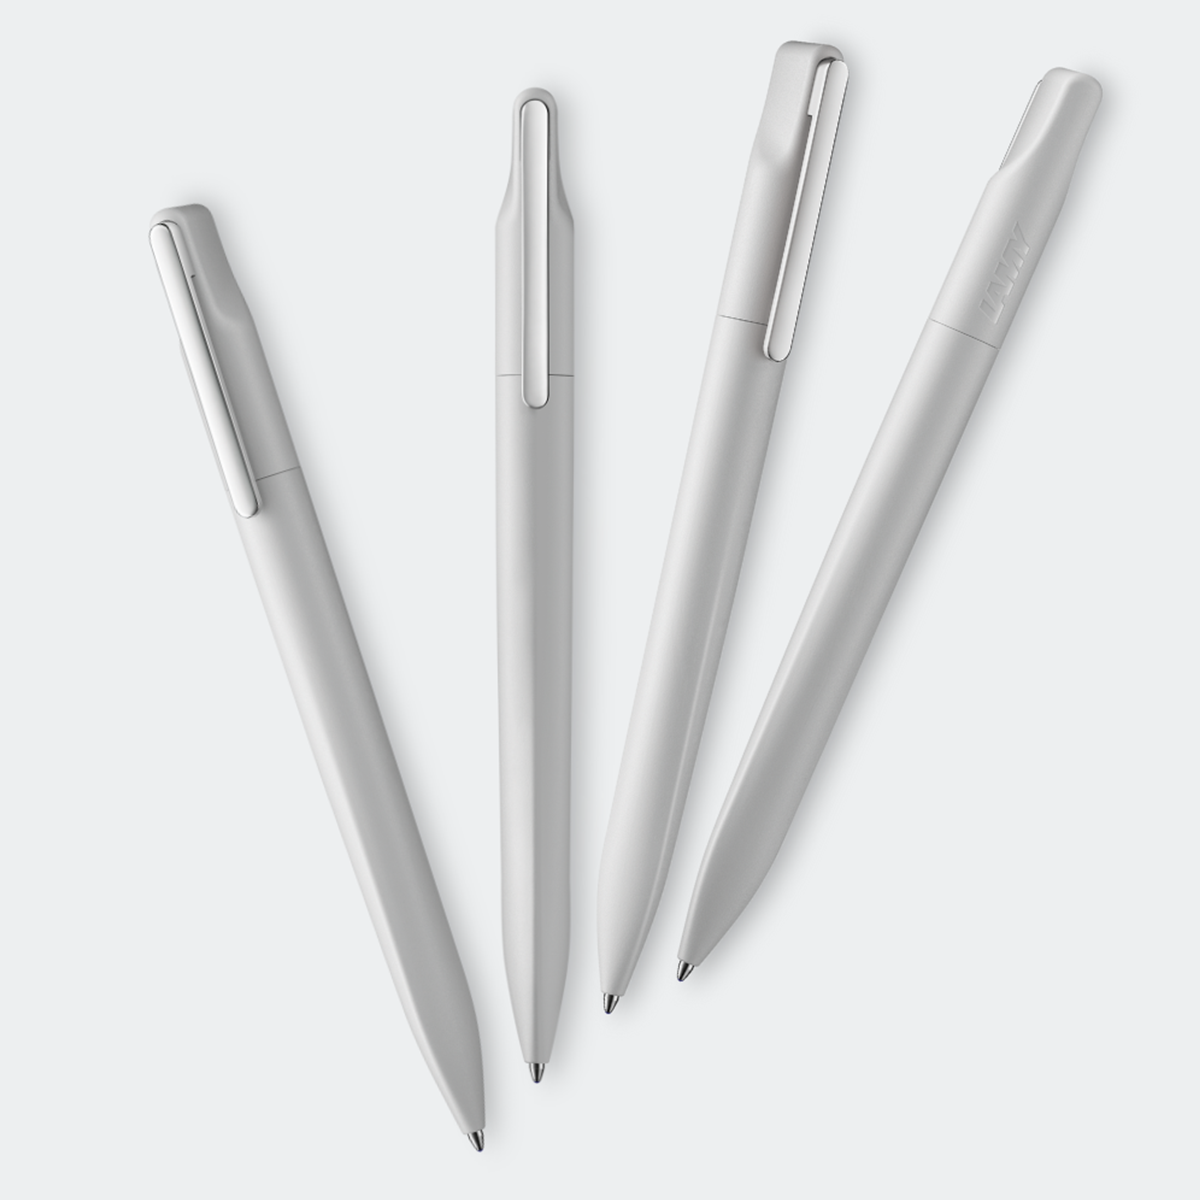 Xevo Ballpoint Lightgrey in the group Pens / Fine Writing / Ballpoint Pens at Pen Store (126991)